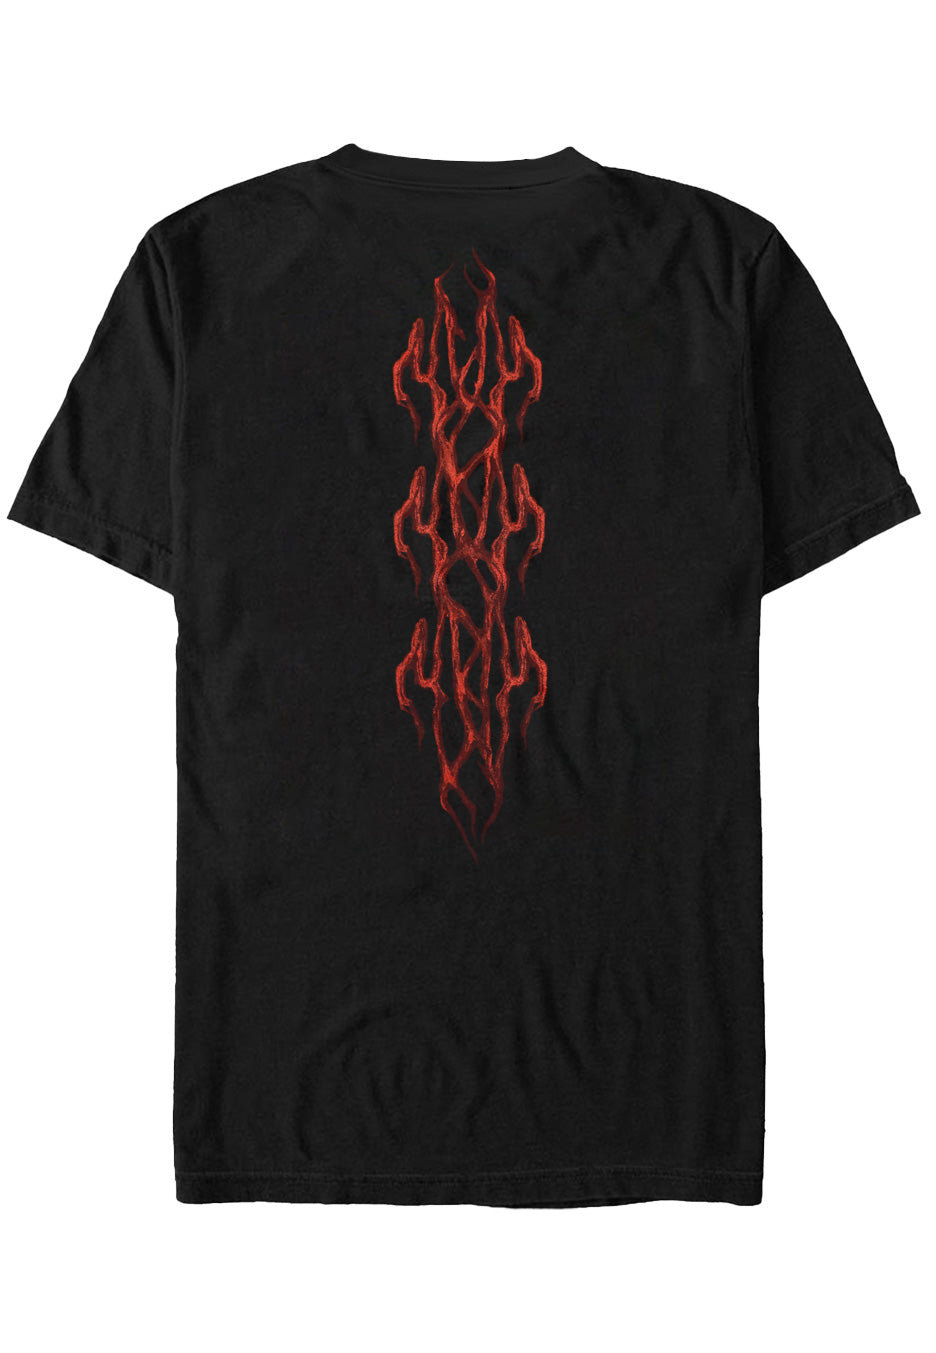 Blind Guardian - Roots - T-Shirt